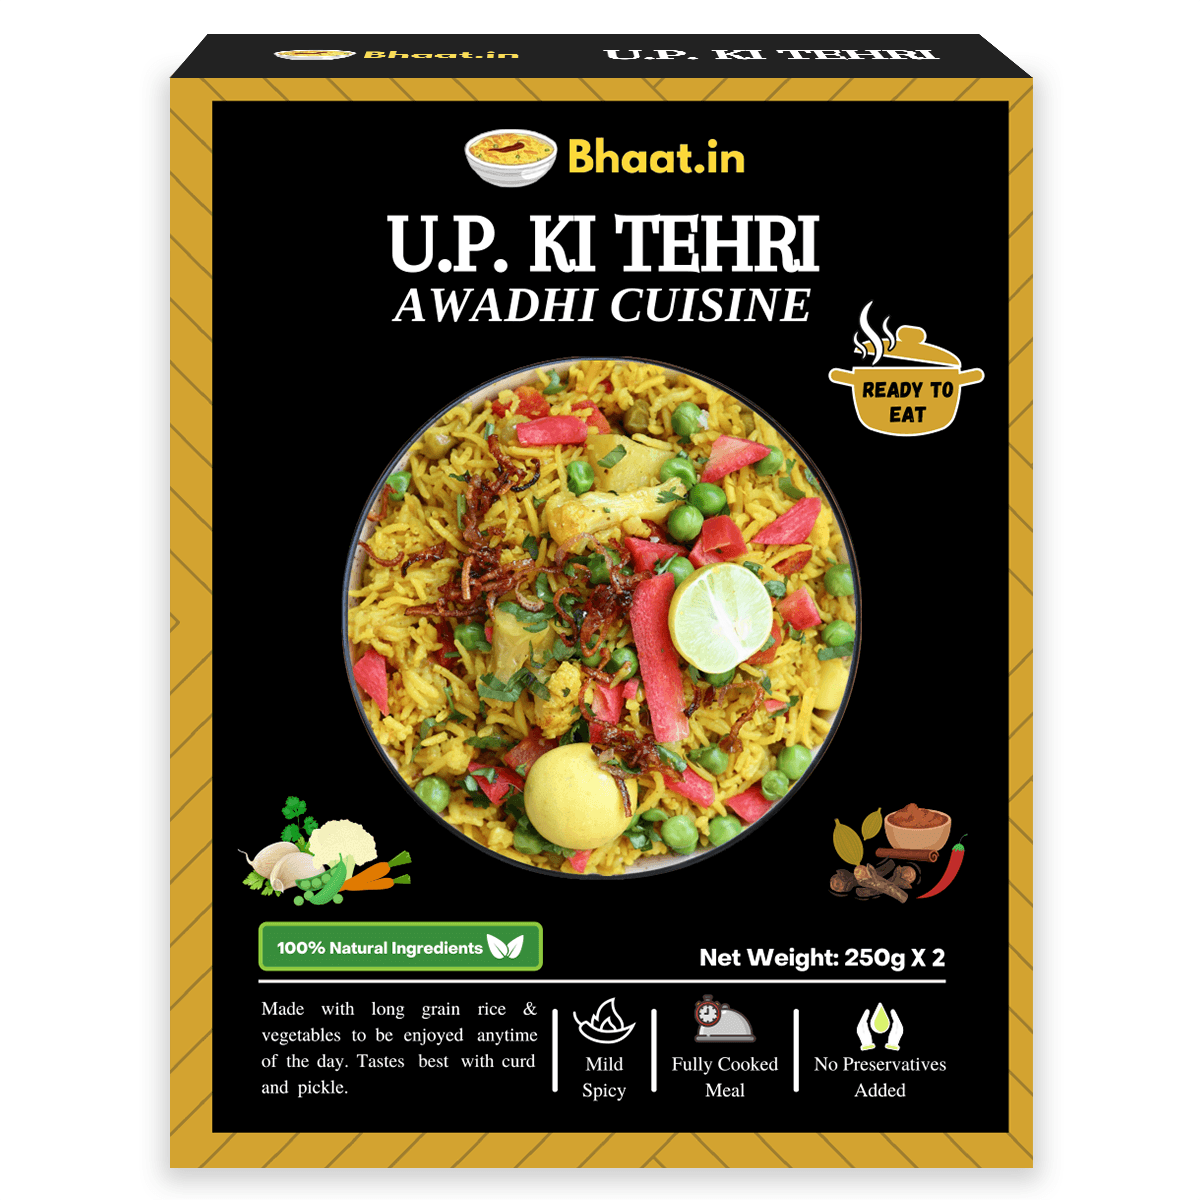 Pack of 2 - Ready to Eat - U.P. Ki Tehri - Bhaat.in